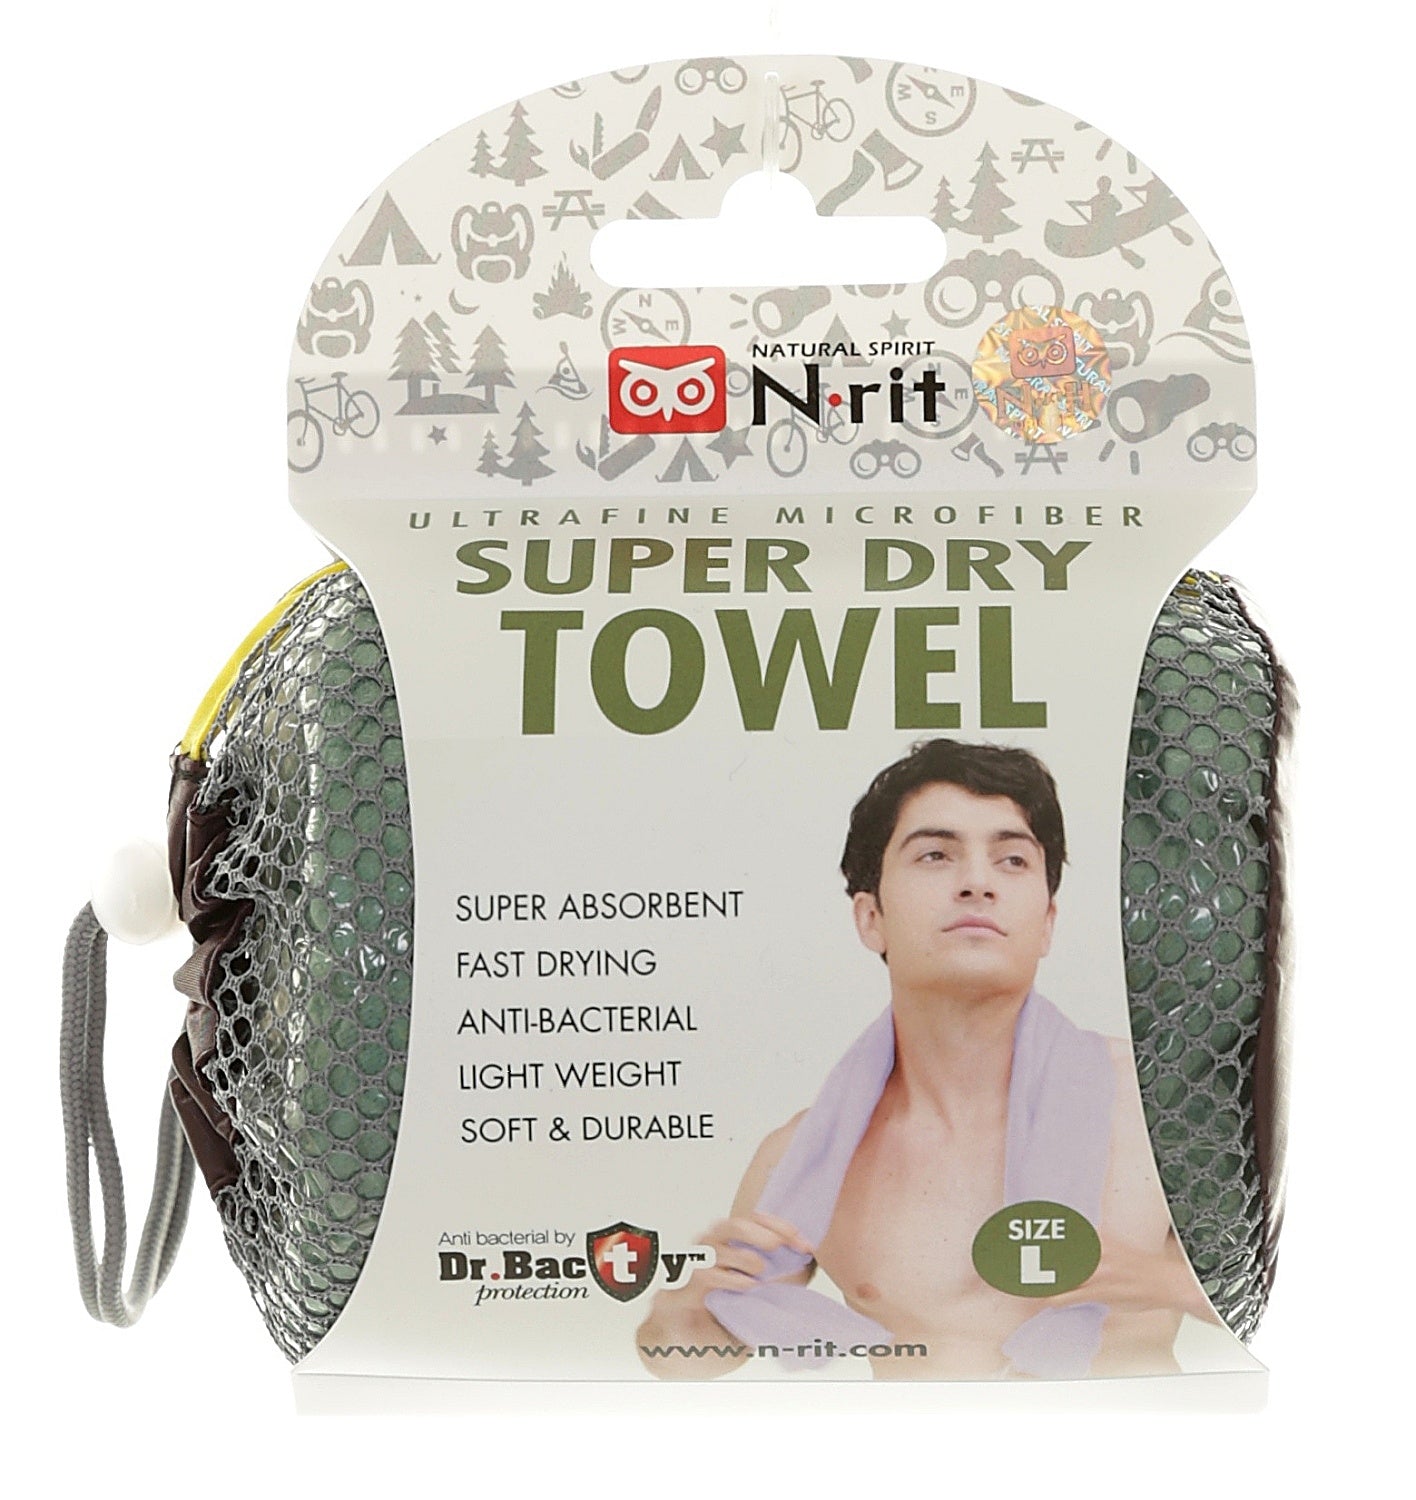 N. Rit 超級幹毛巾 L 號